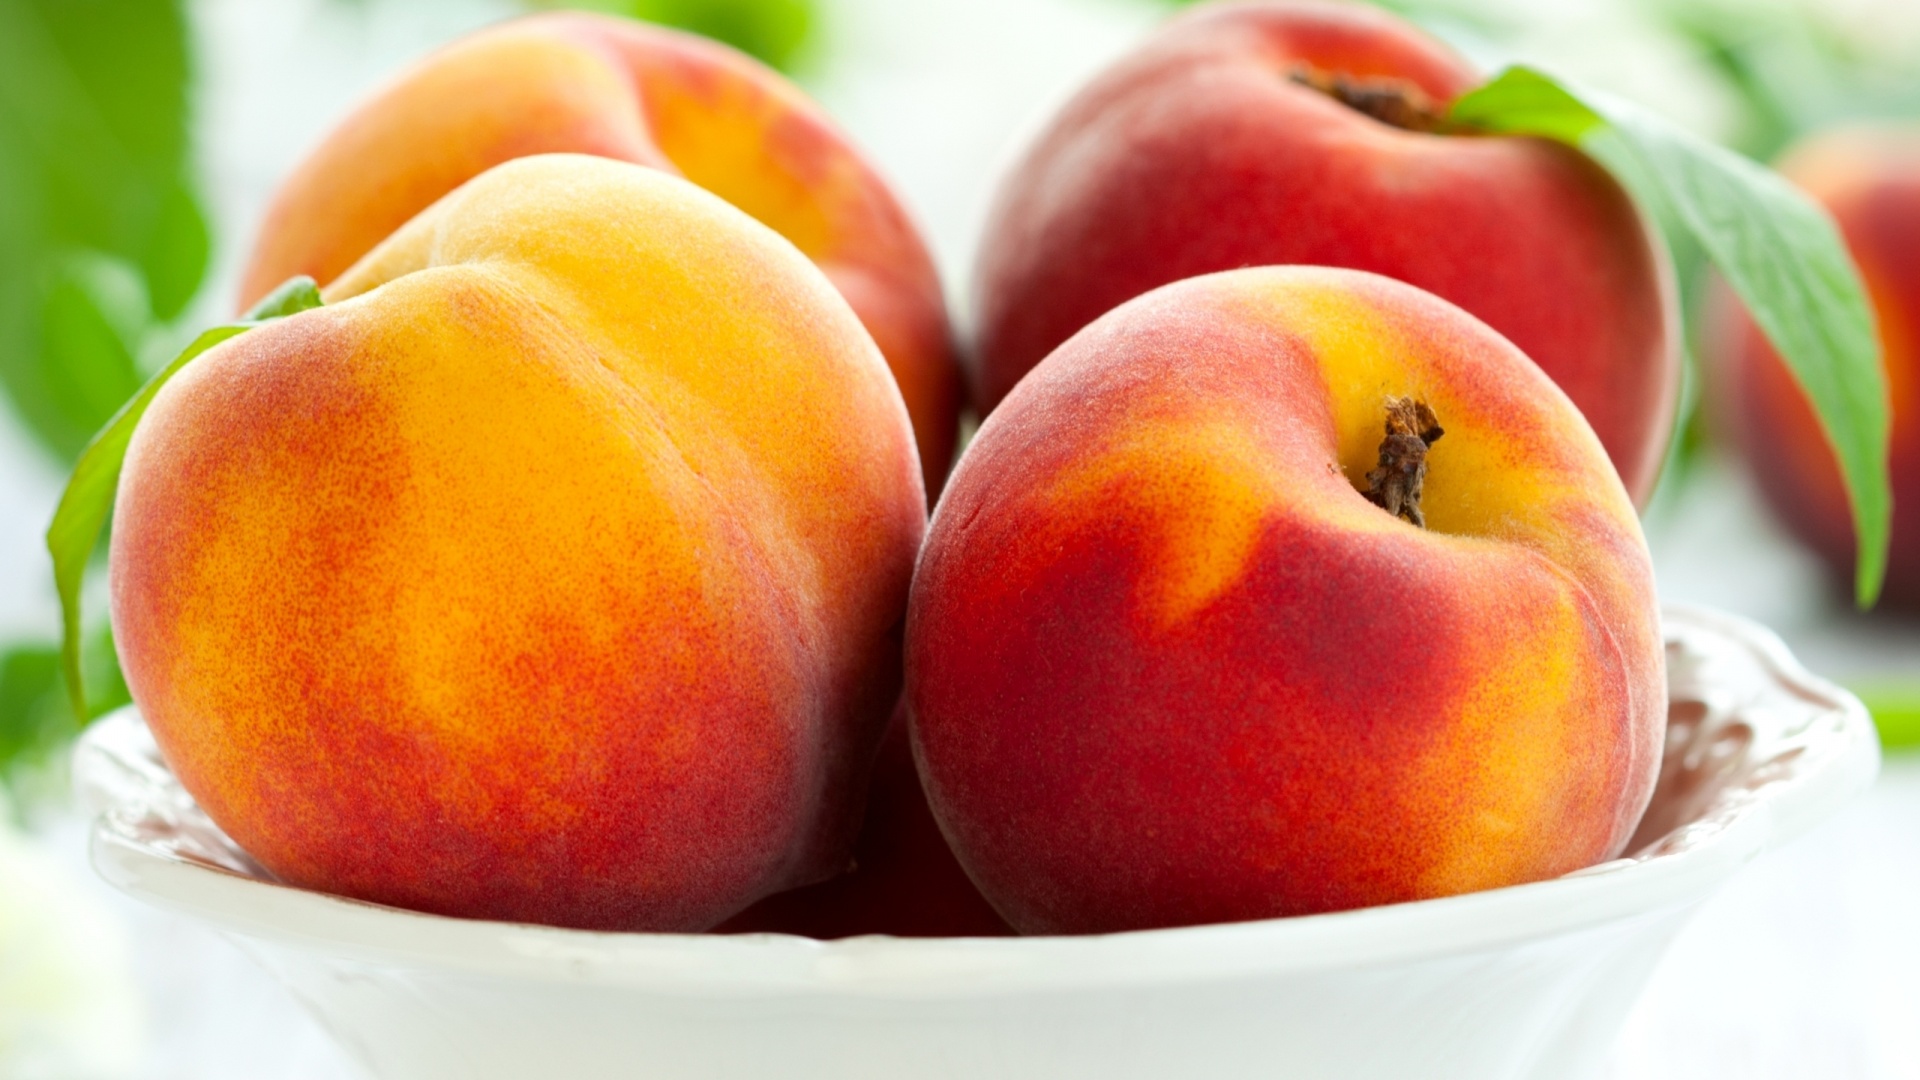 Peaches Fruit   1920x1080   469621 1920x1080